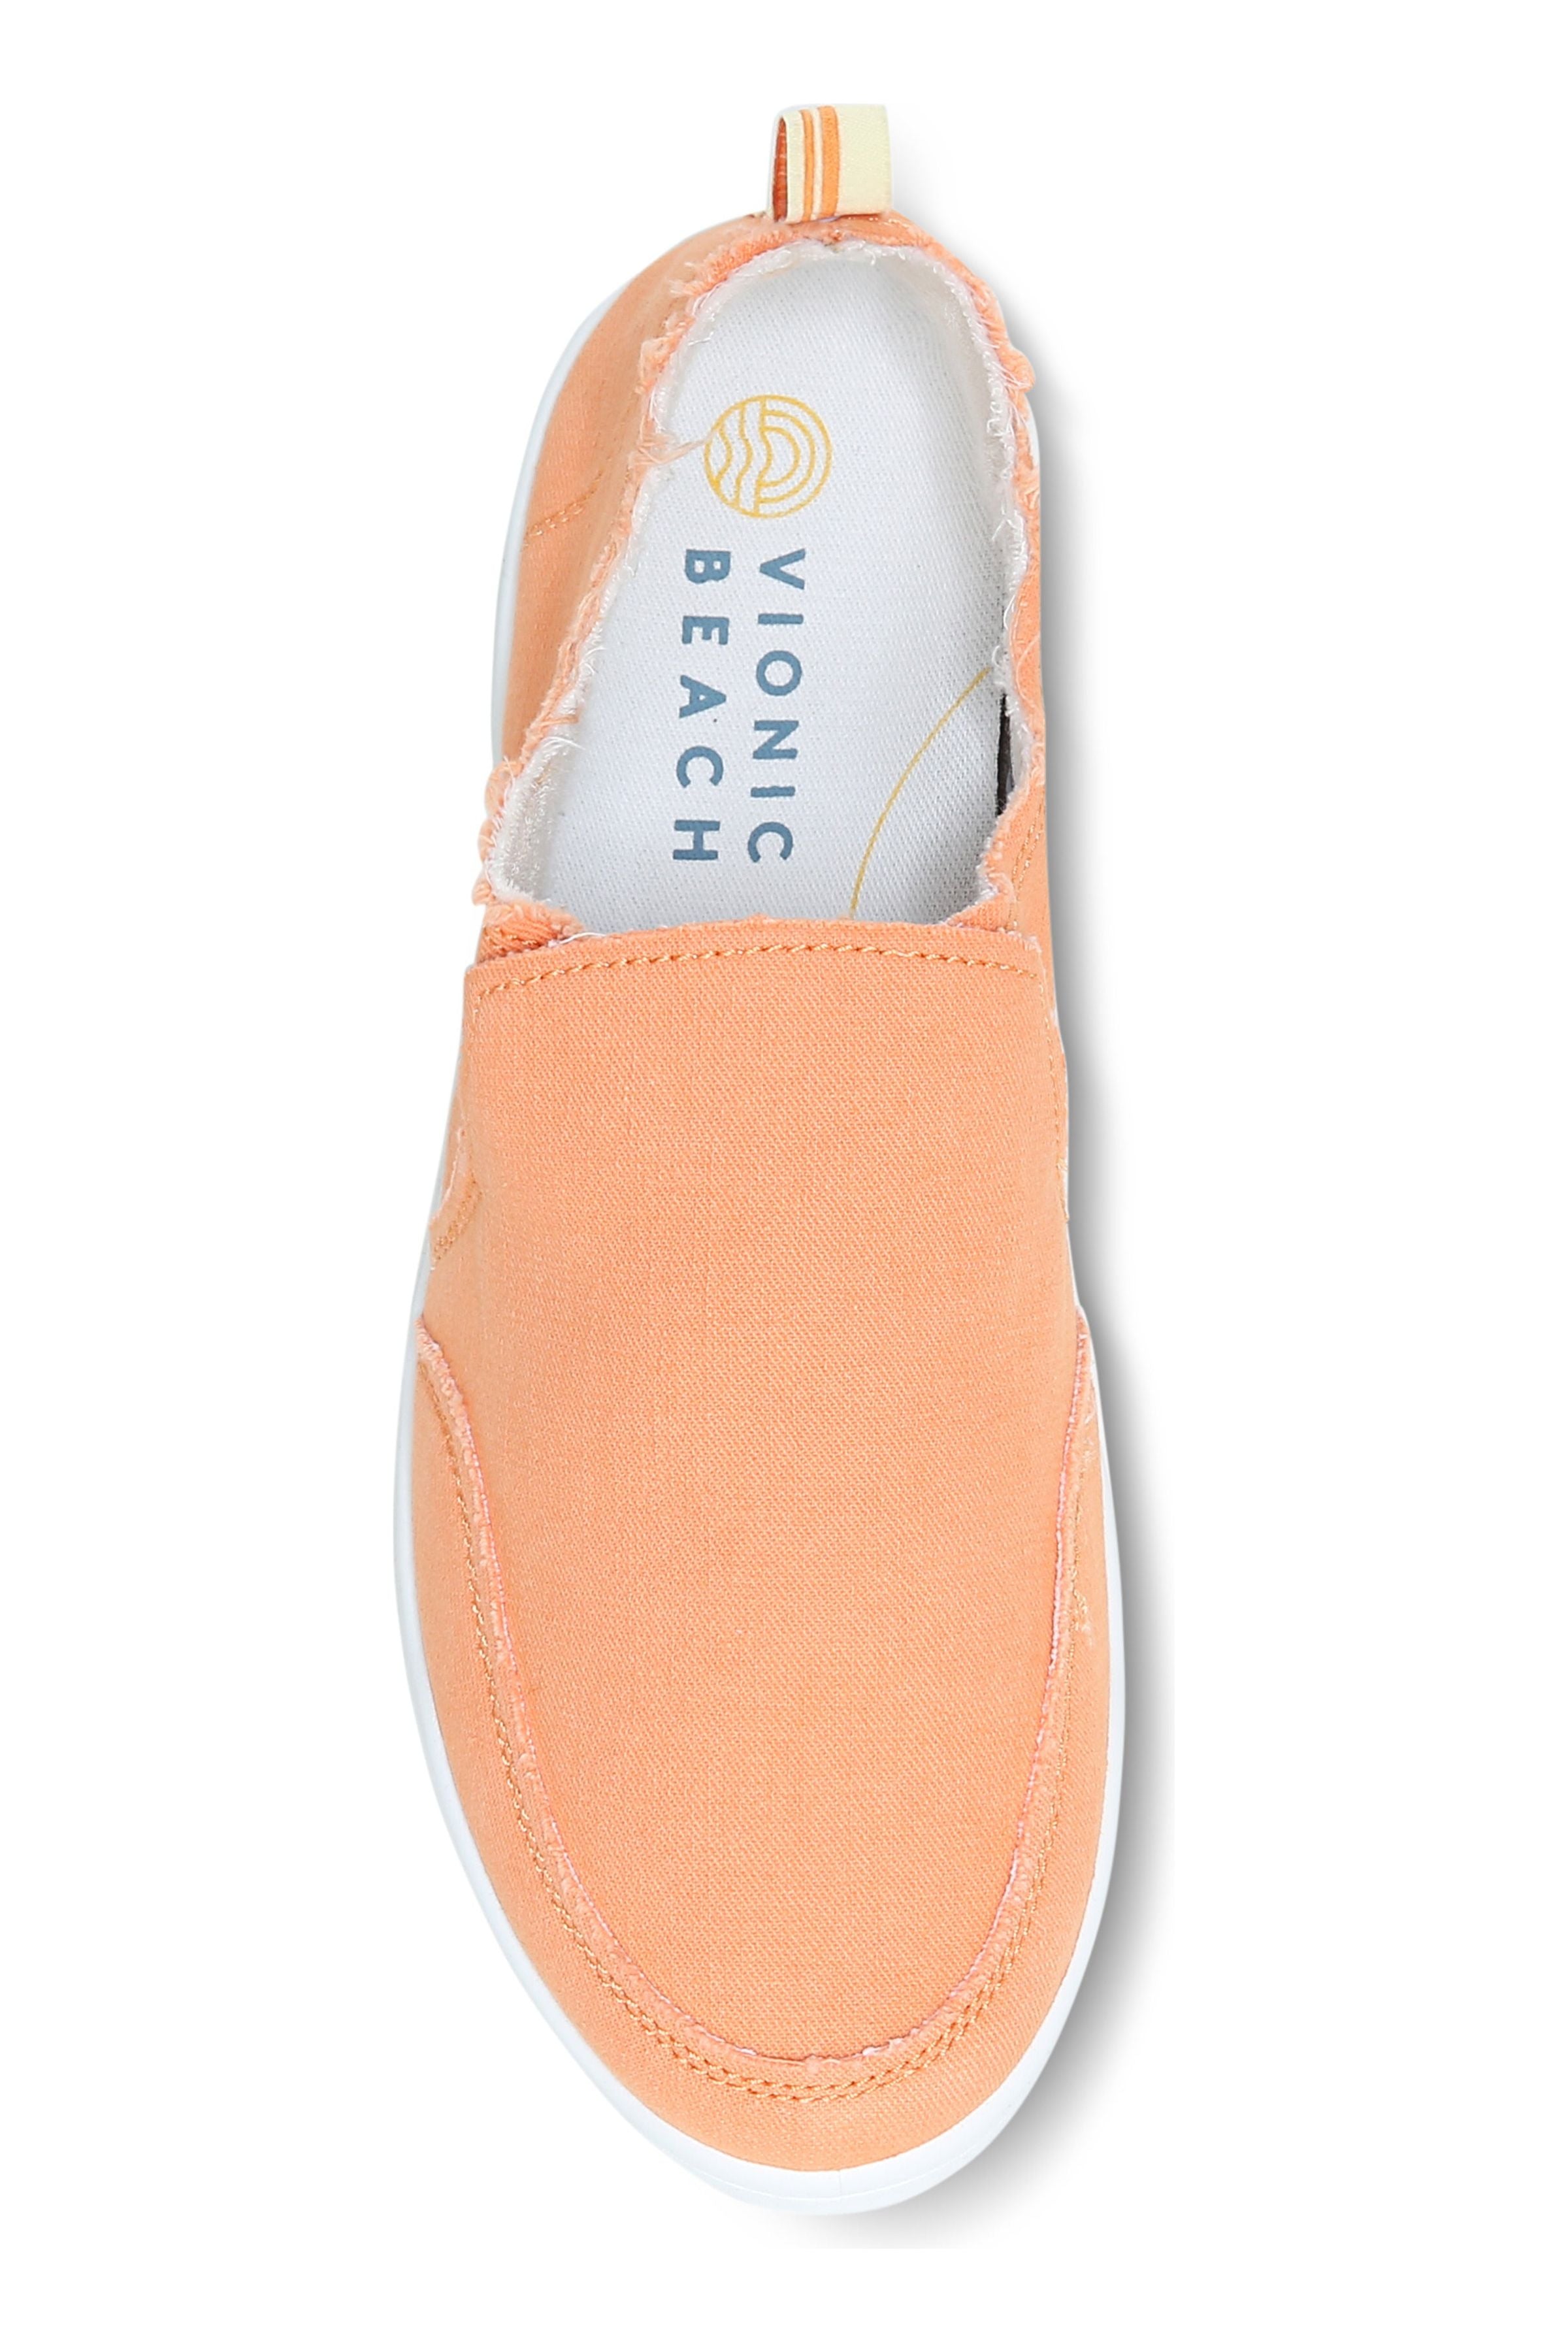 Vionic Canvas Slip On Shoes - Style Malibu, top, melon